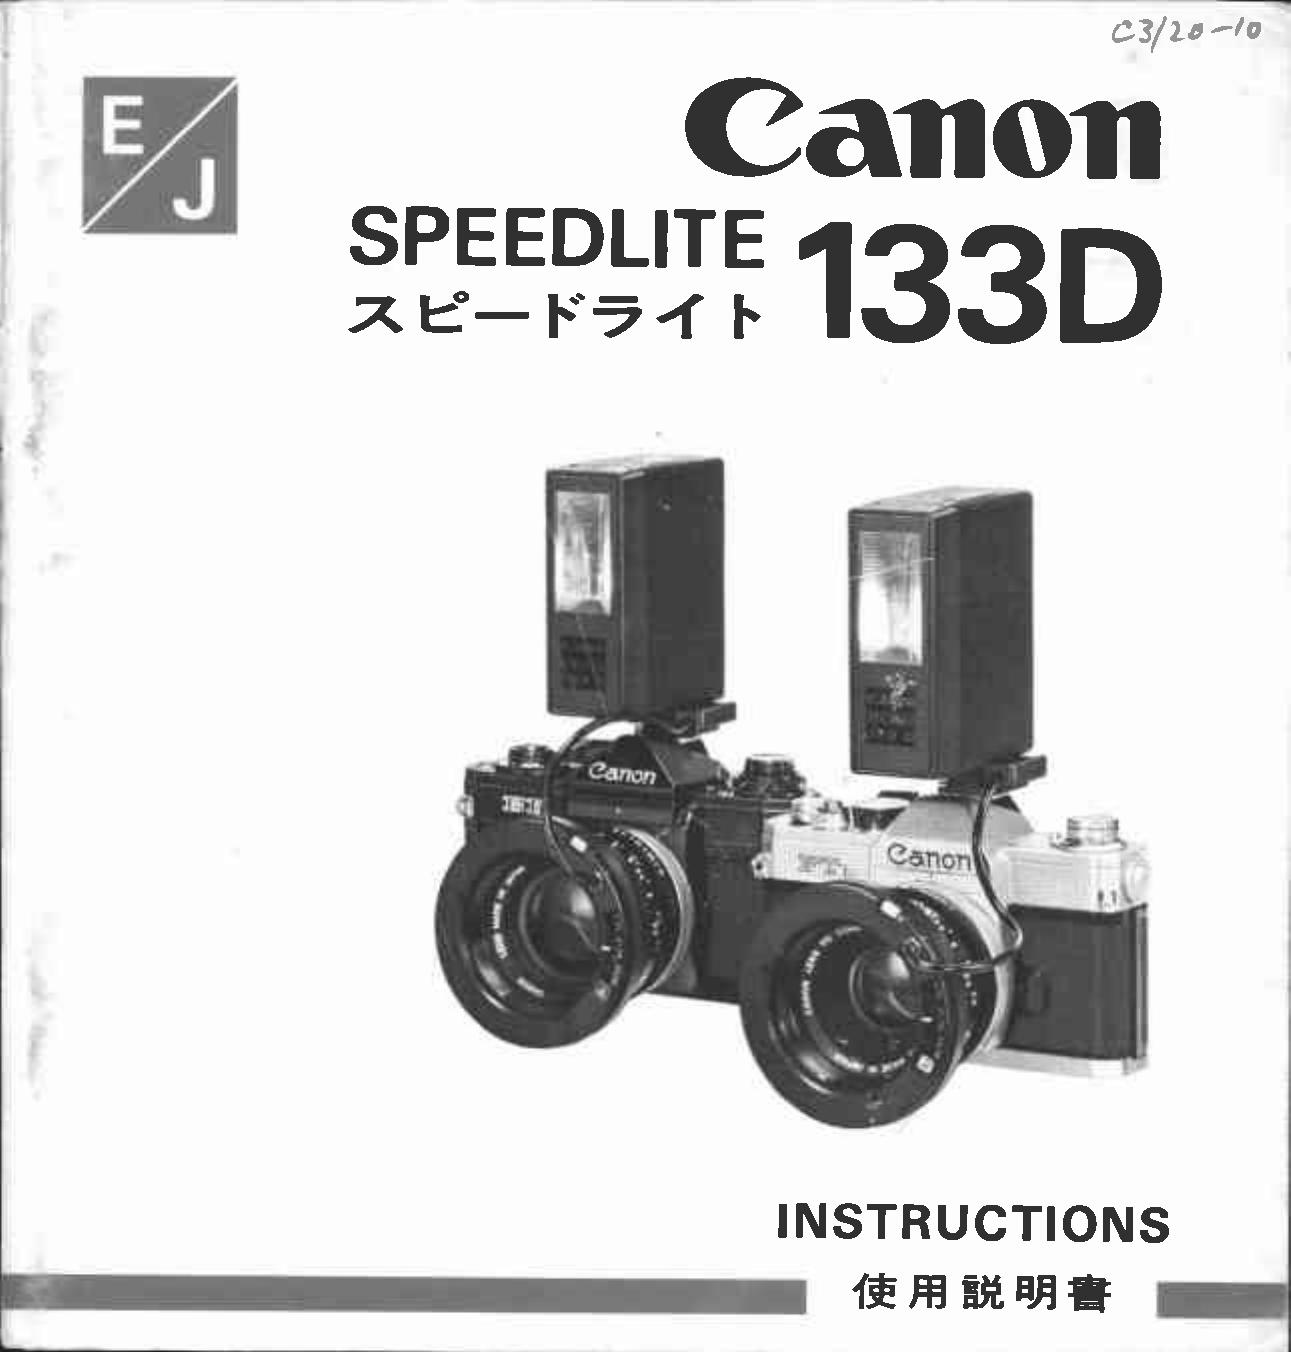 Canon 133 D Camera Flash User Manual